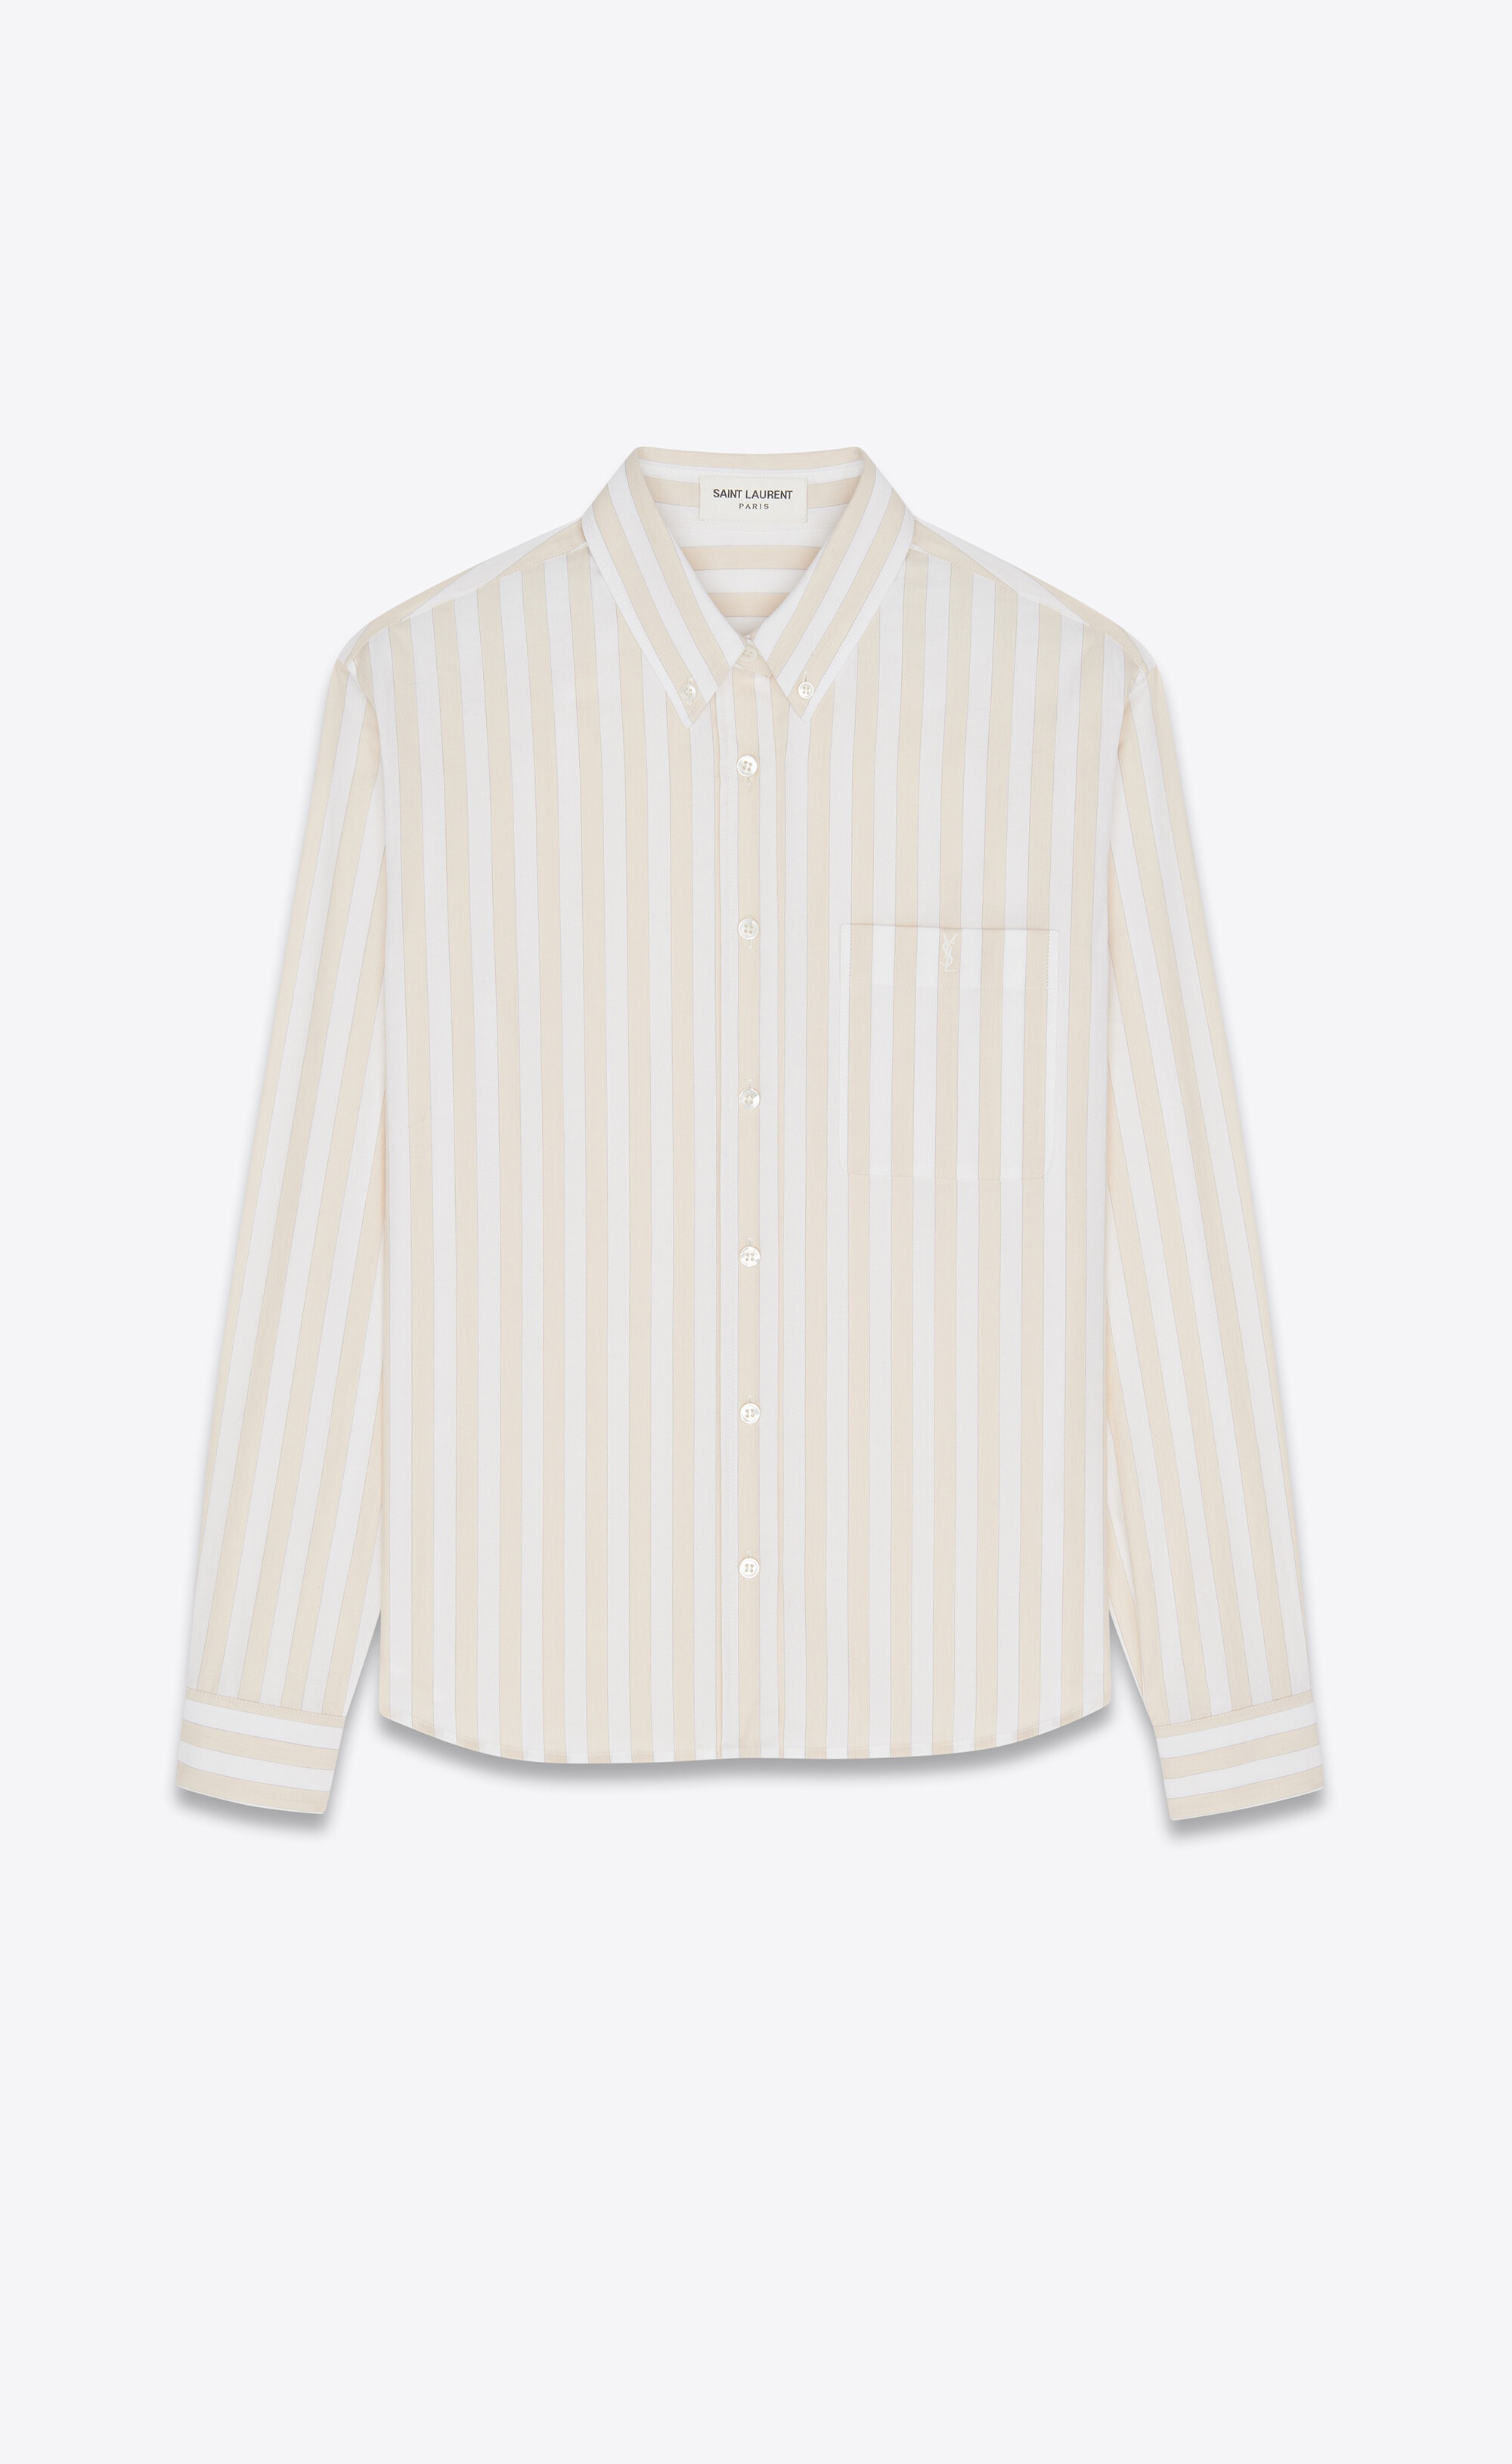 monogram shirt in striped cotton - 1